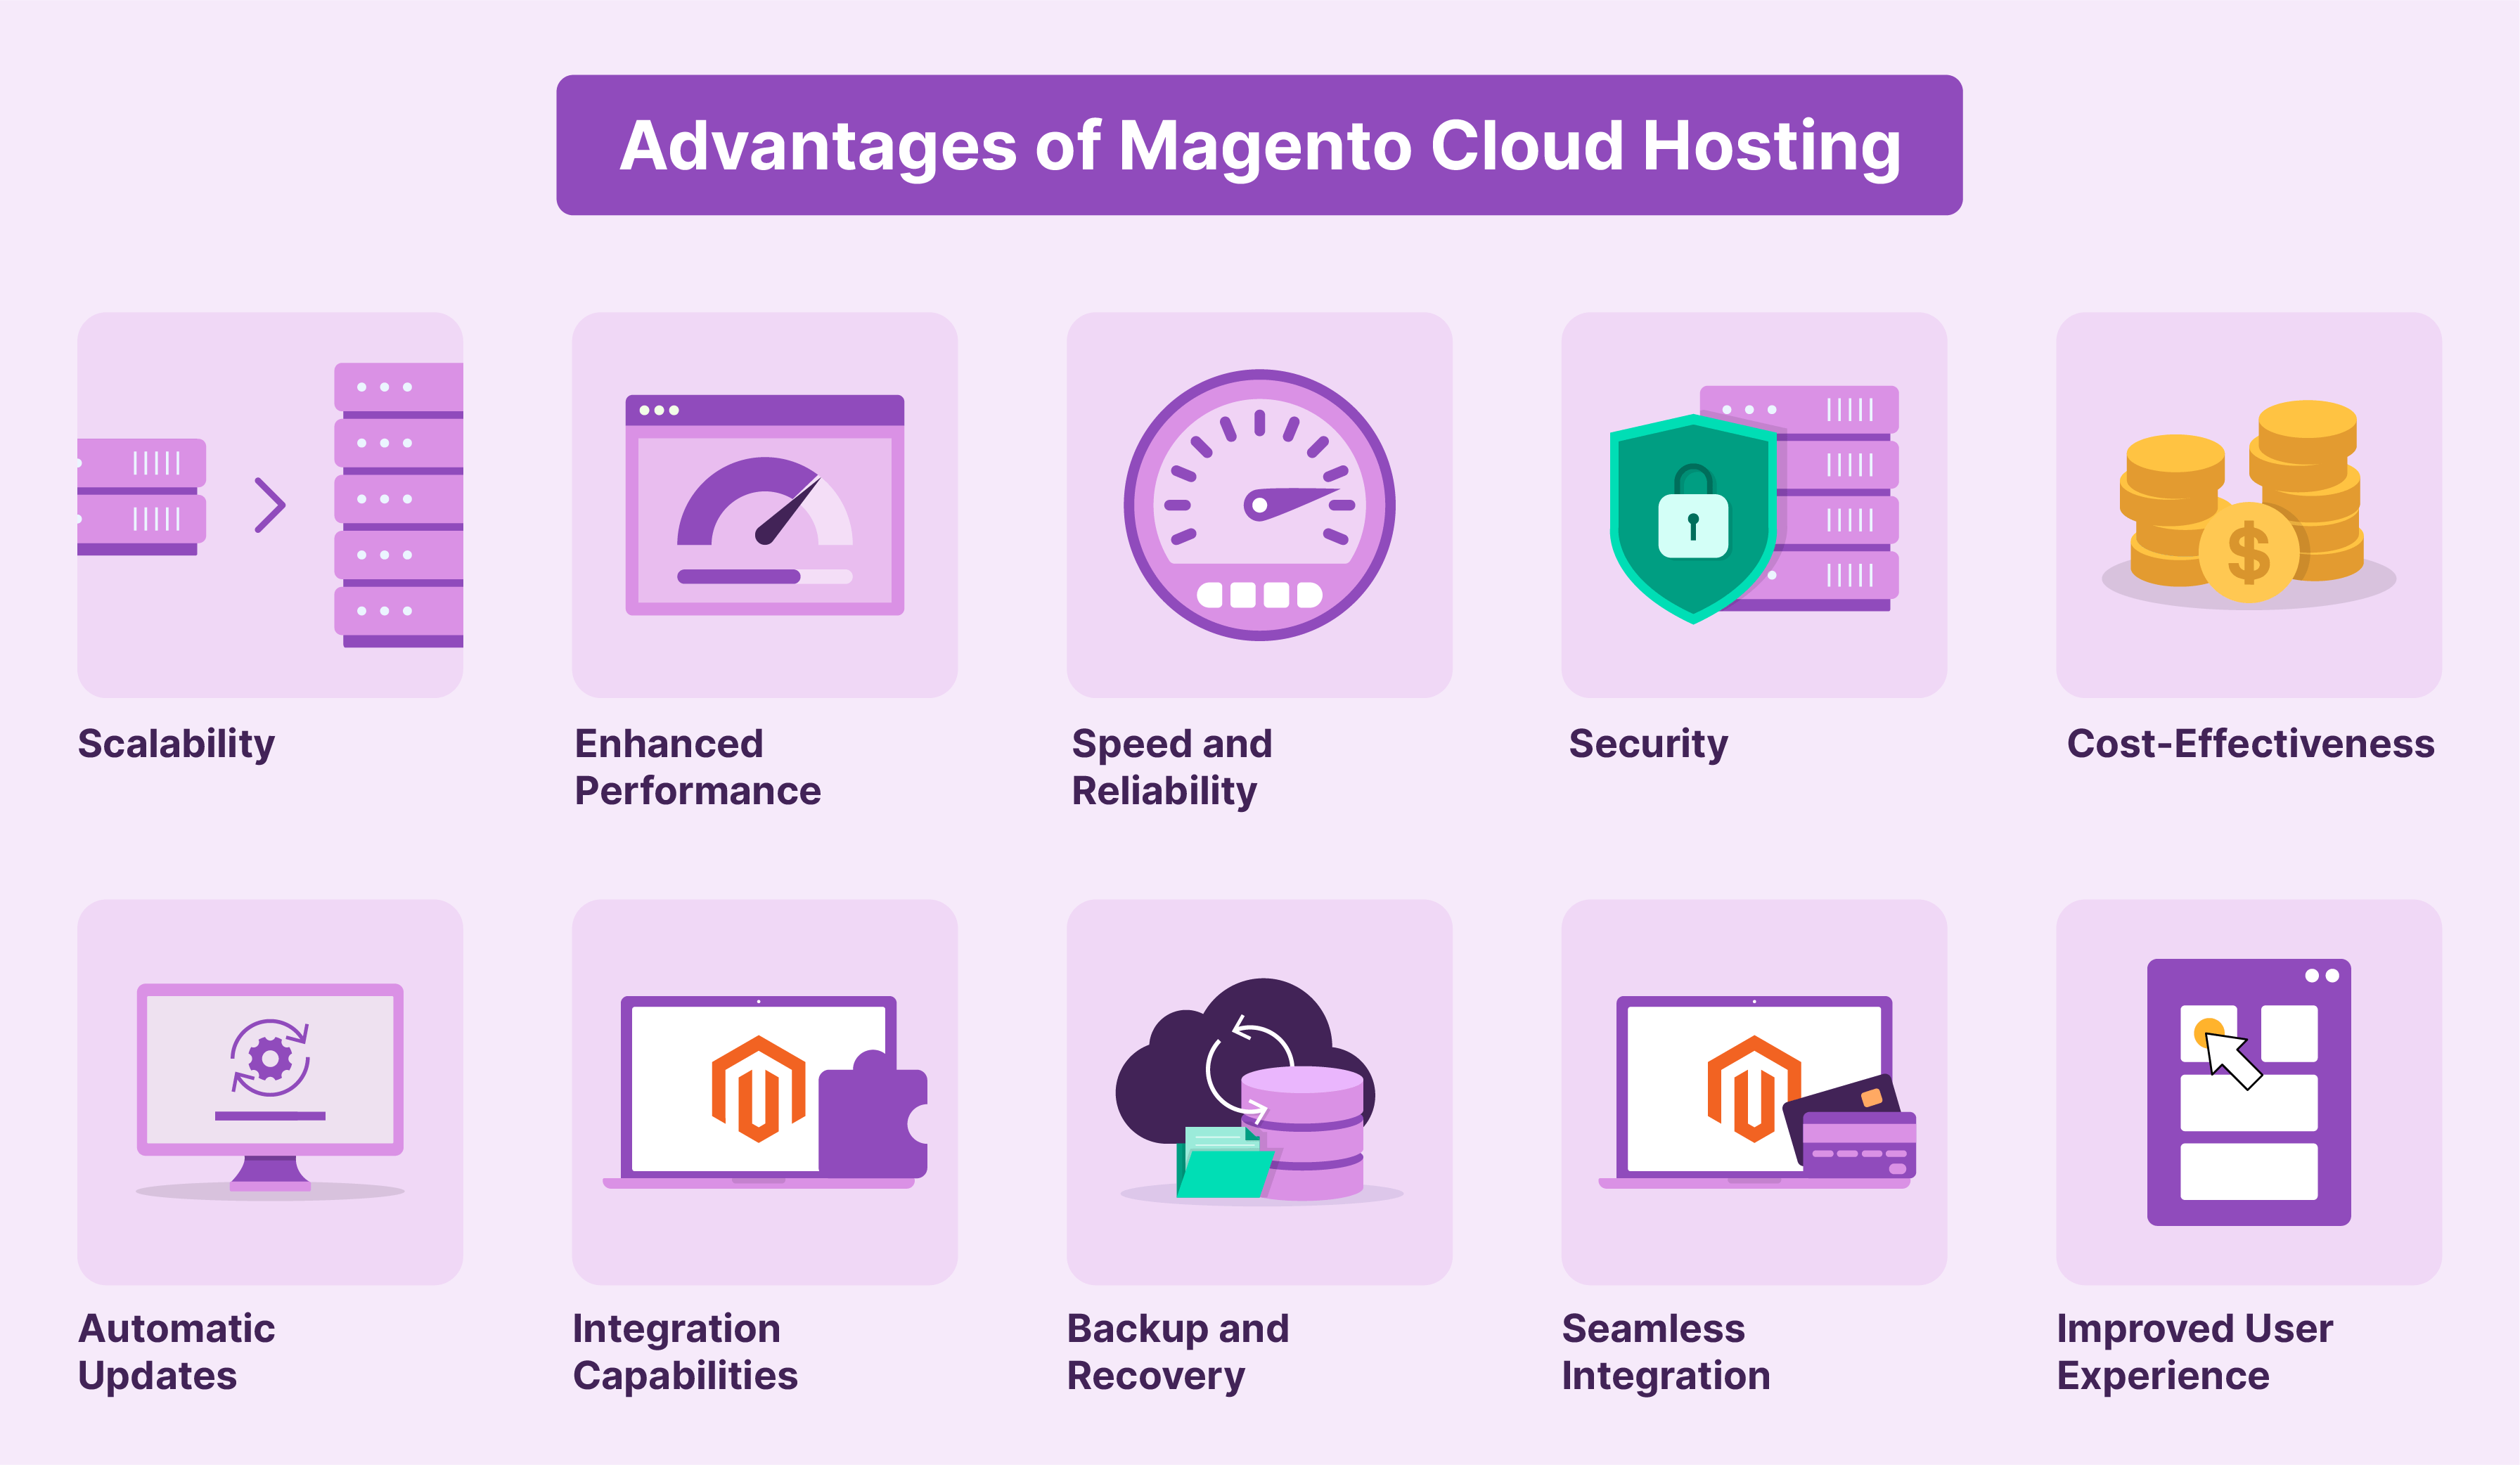 Key benefits of Magento Cloud Hosting.